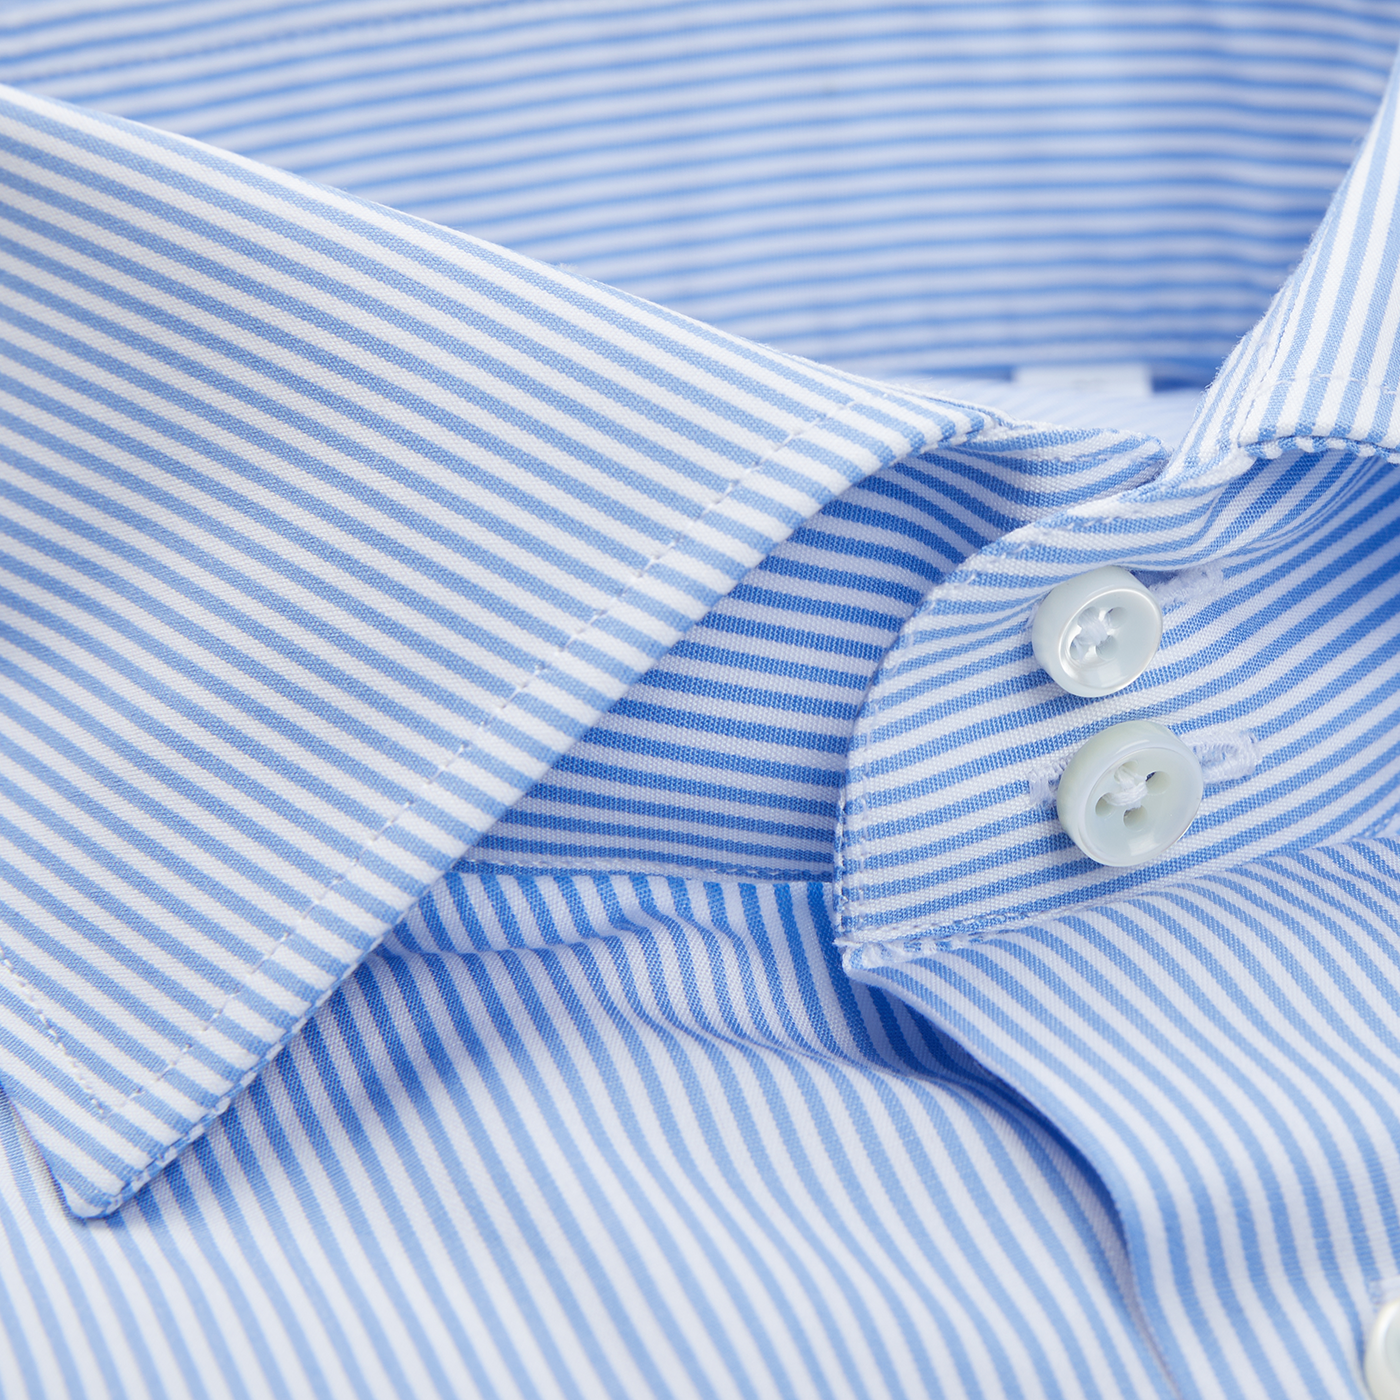 A close up of a Alexander Kraft Monte Carlo Blue White Bengal Stripe Cotton Double Cuff Shirt.